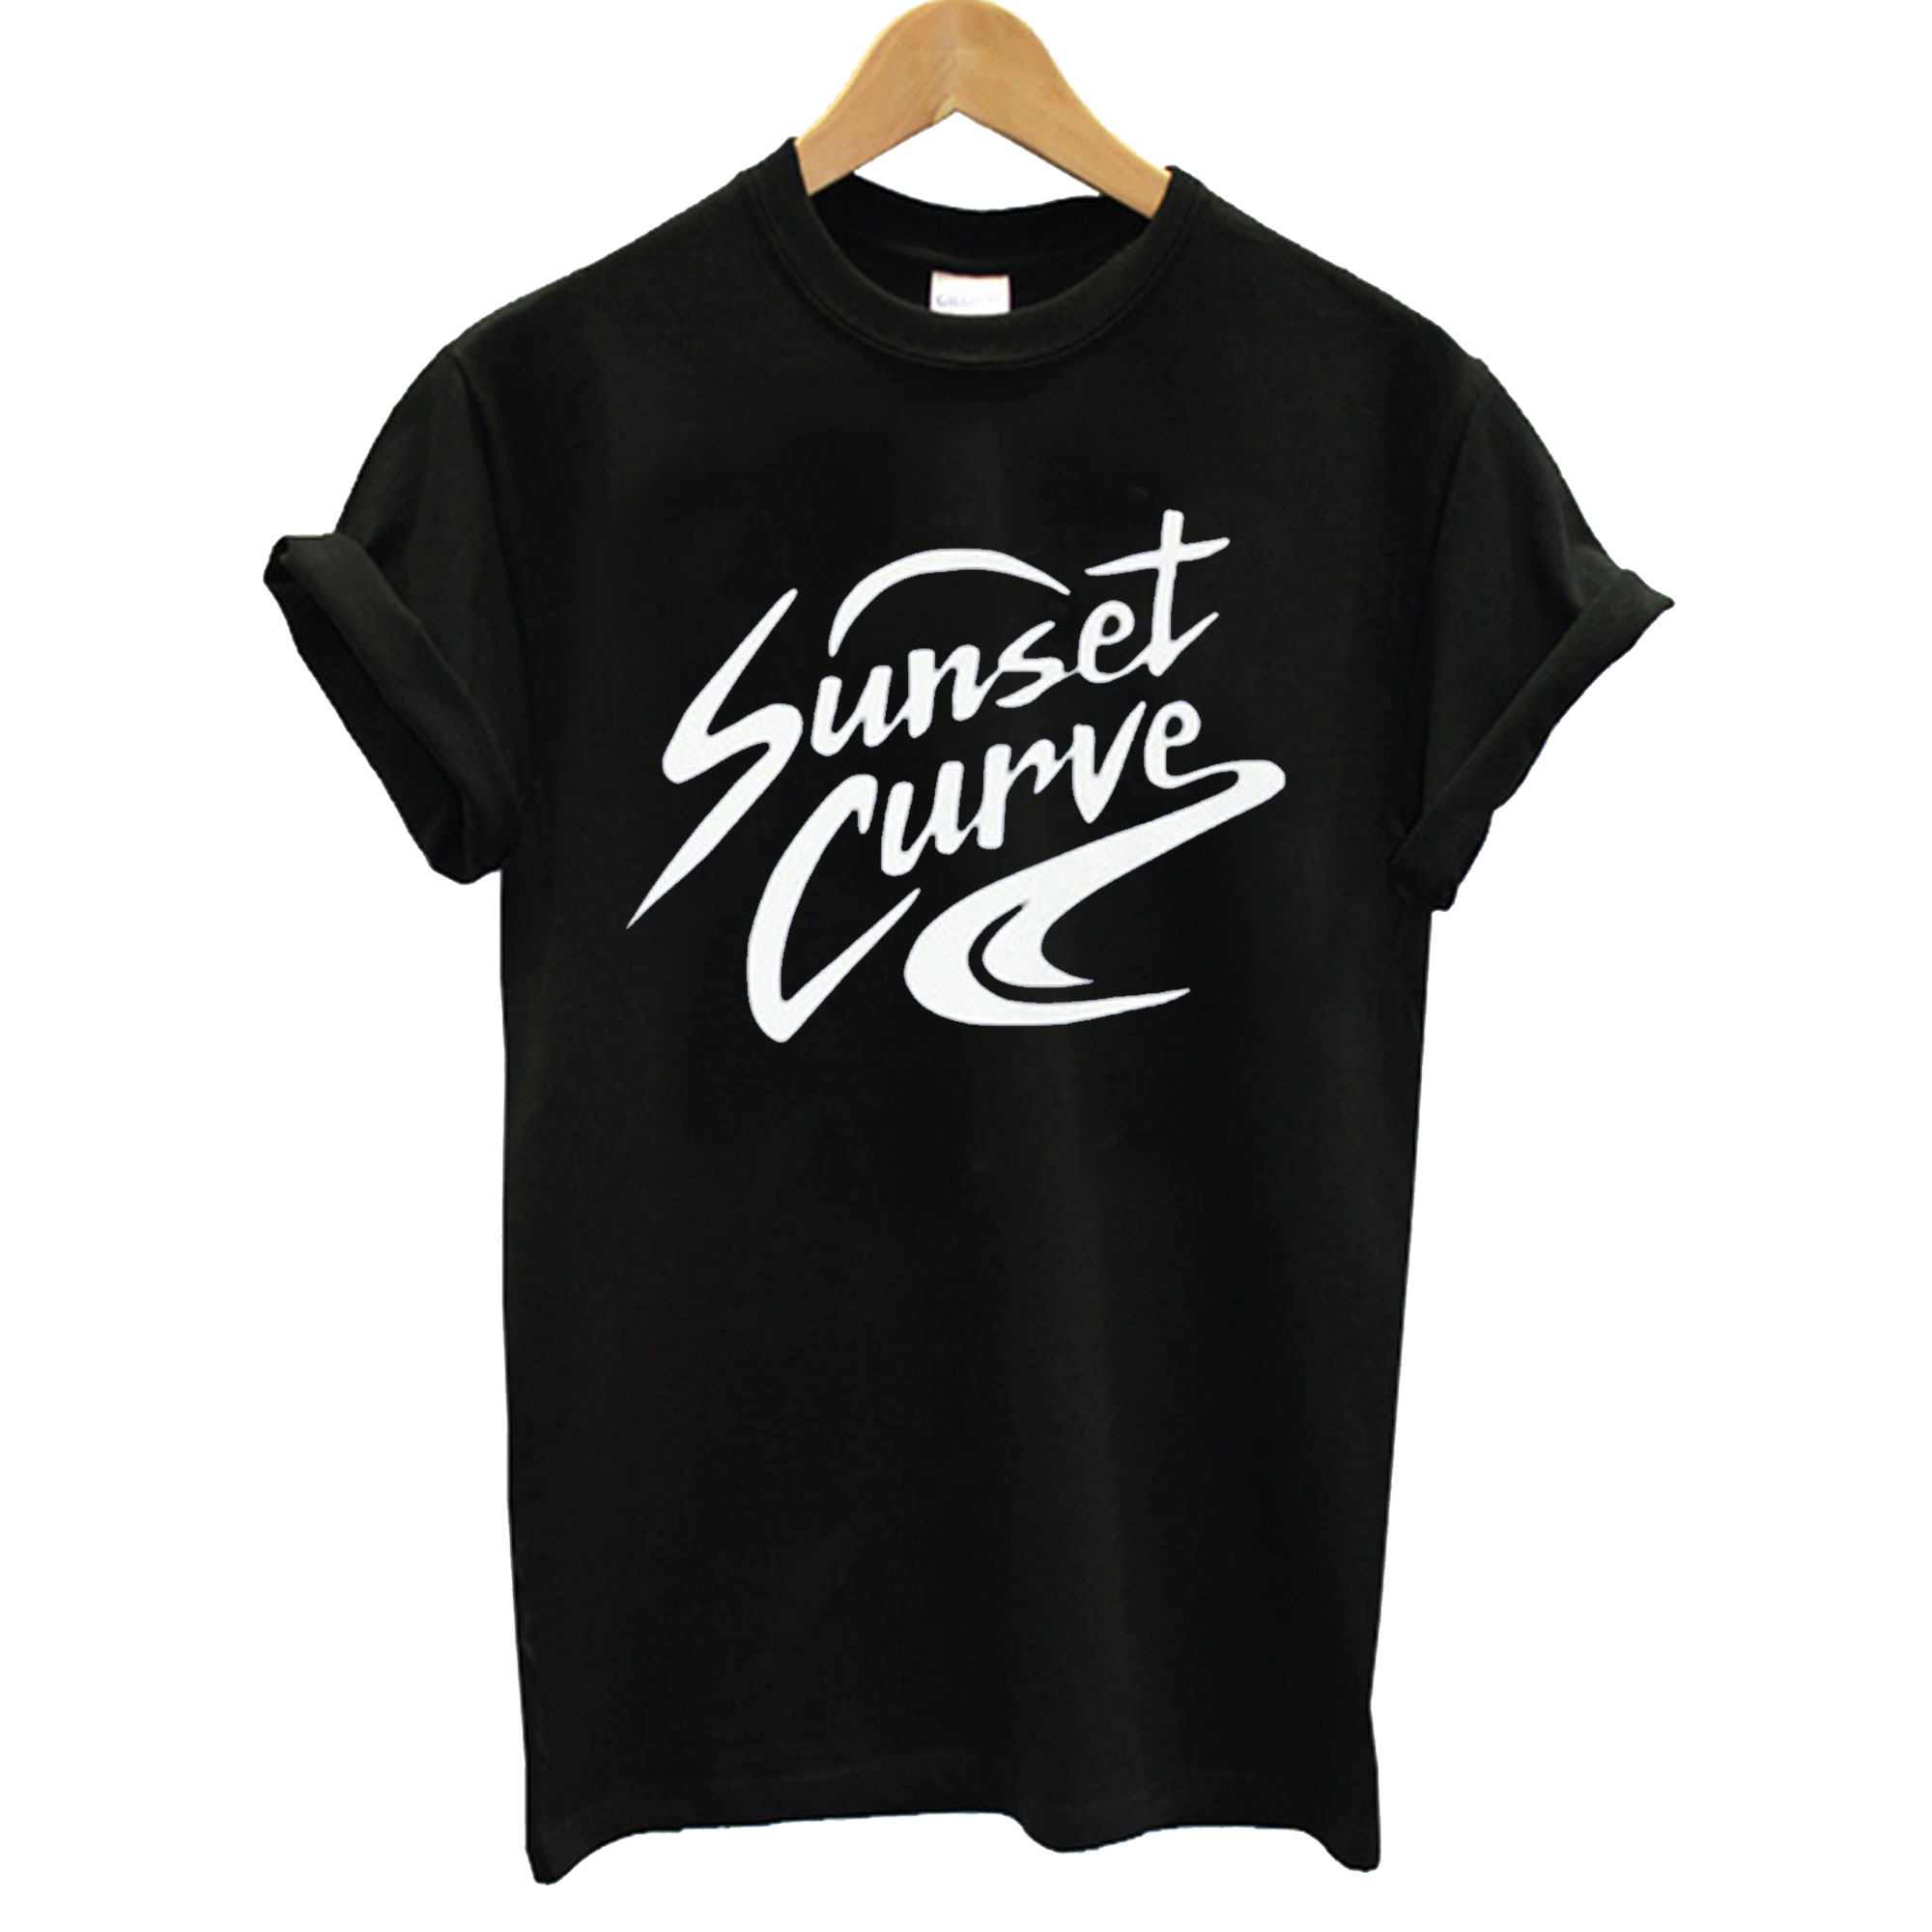 Sunset Curve T Shirt